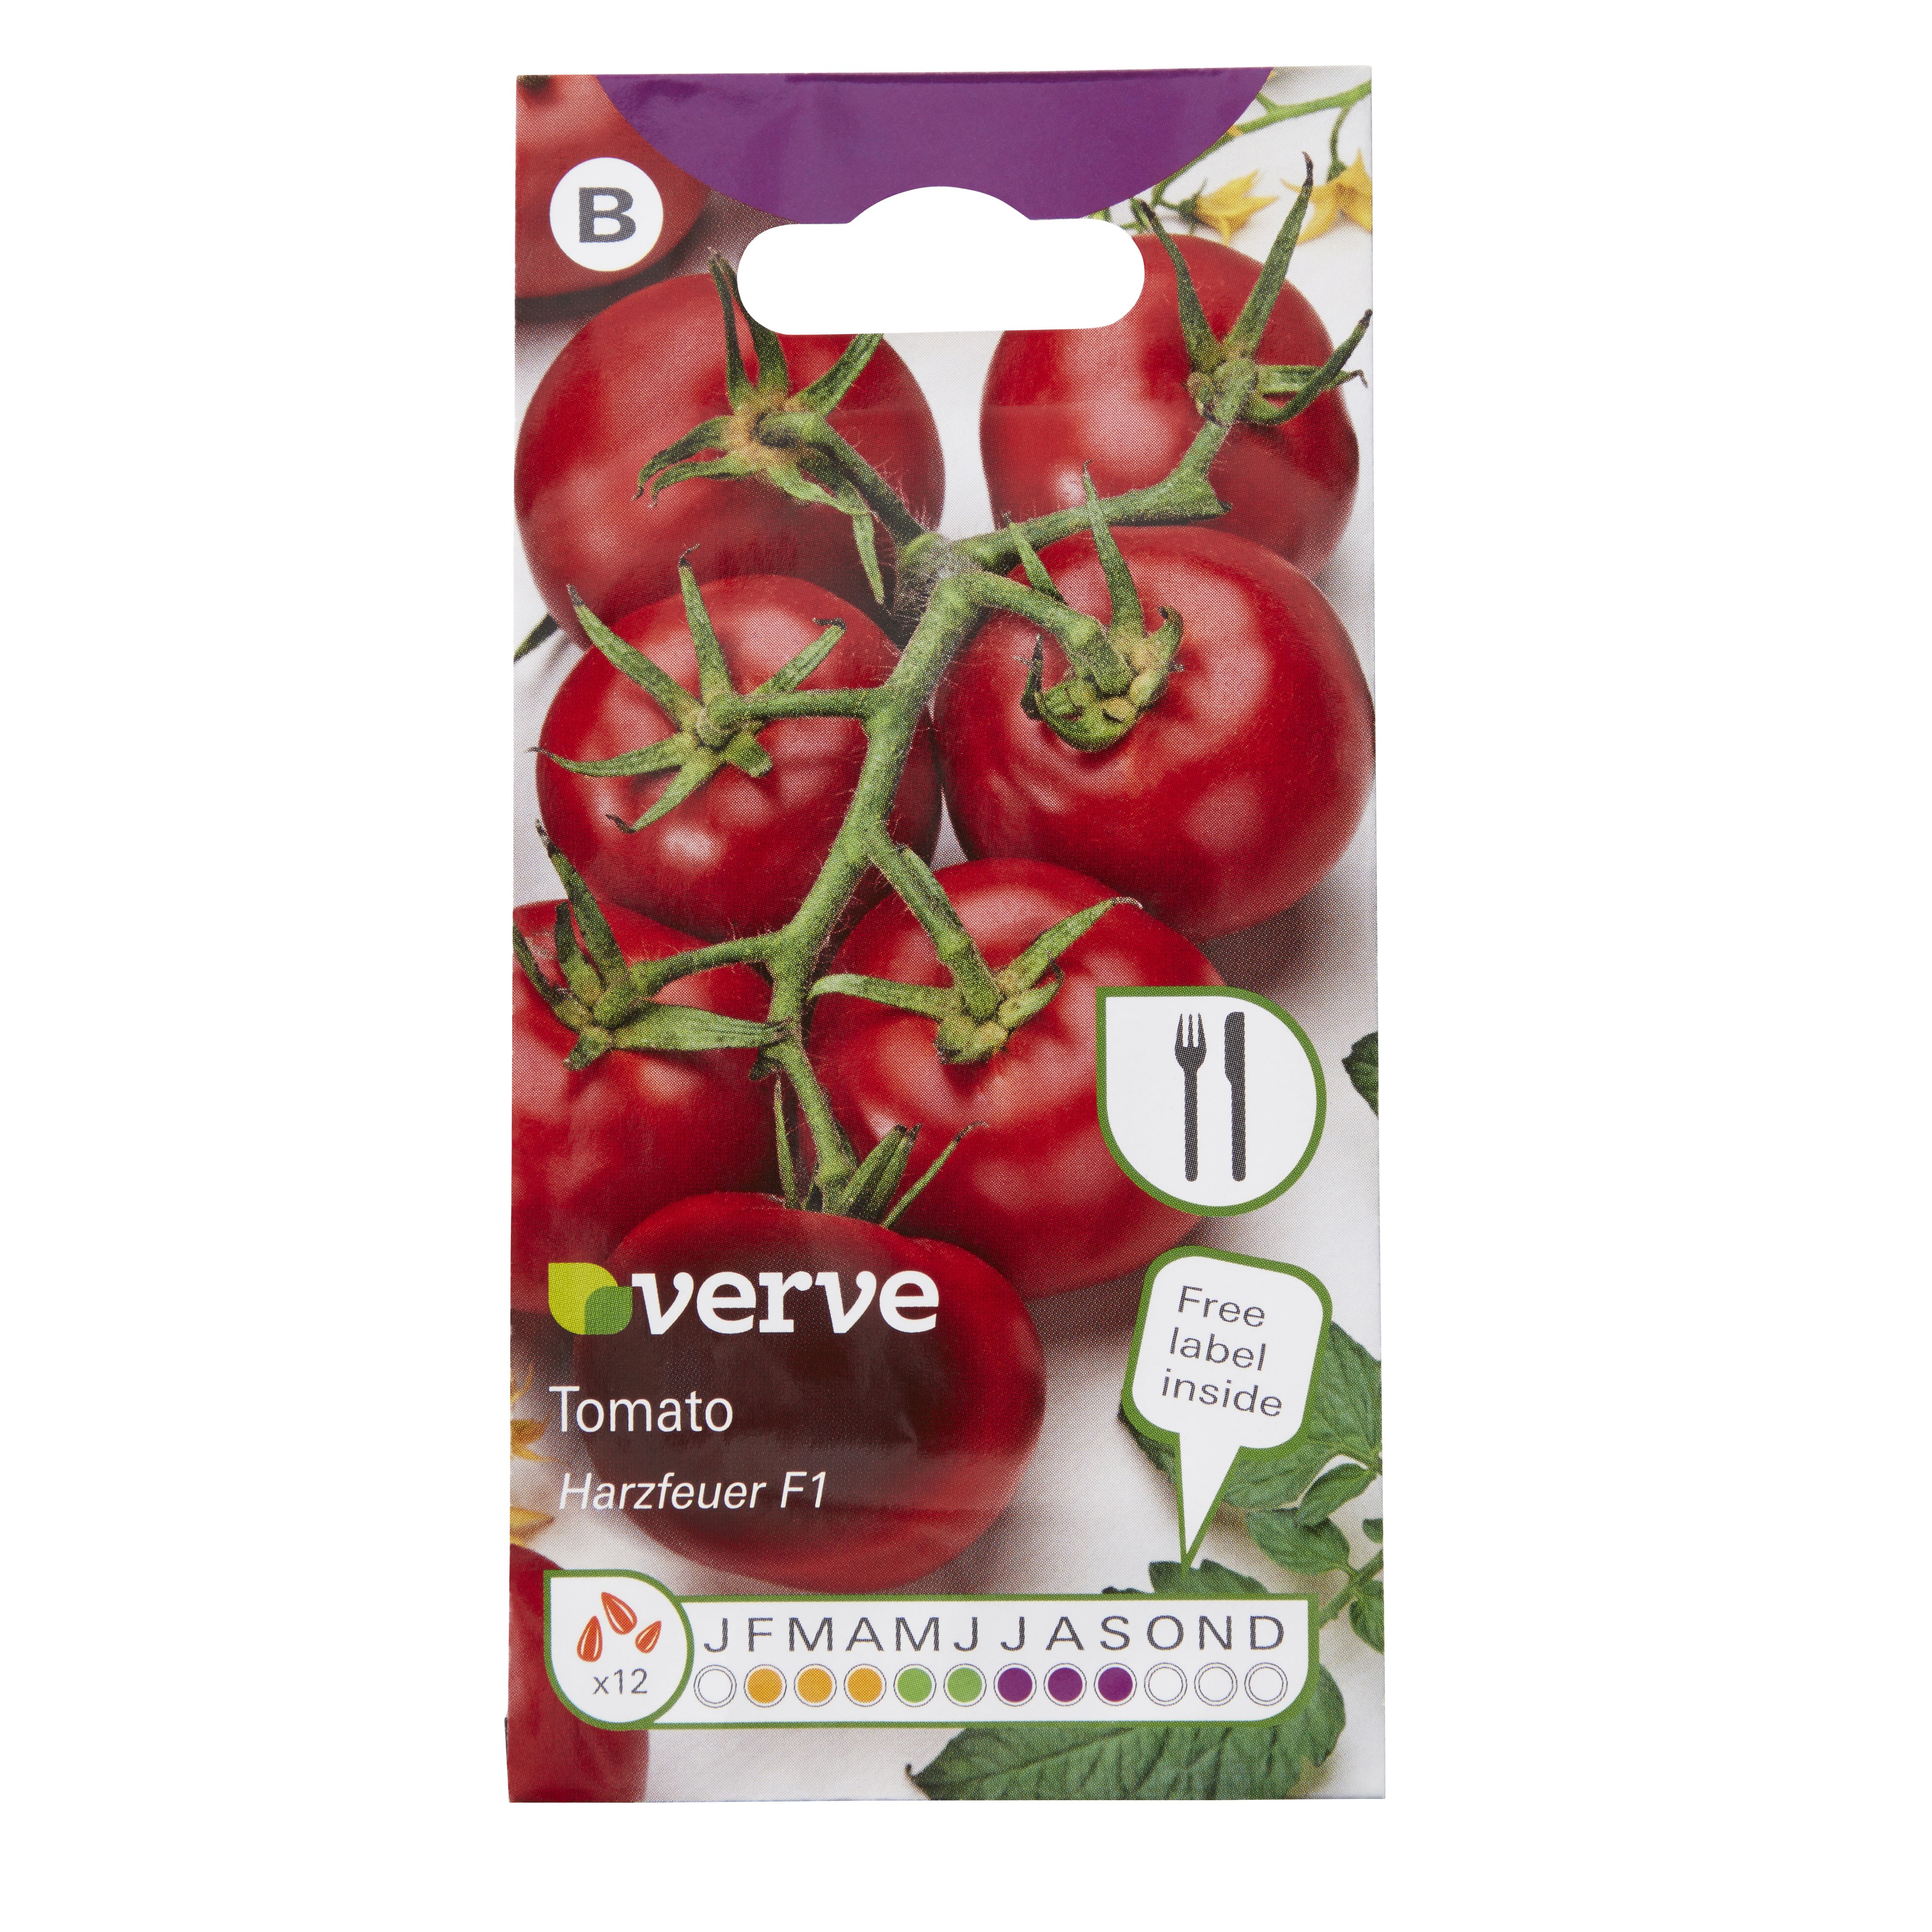 Verve Herzfeuer F1 tomato Seed